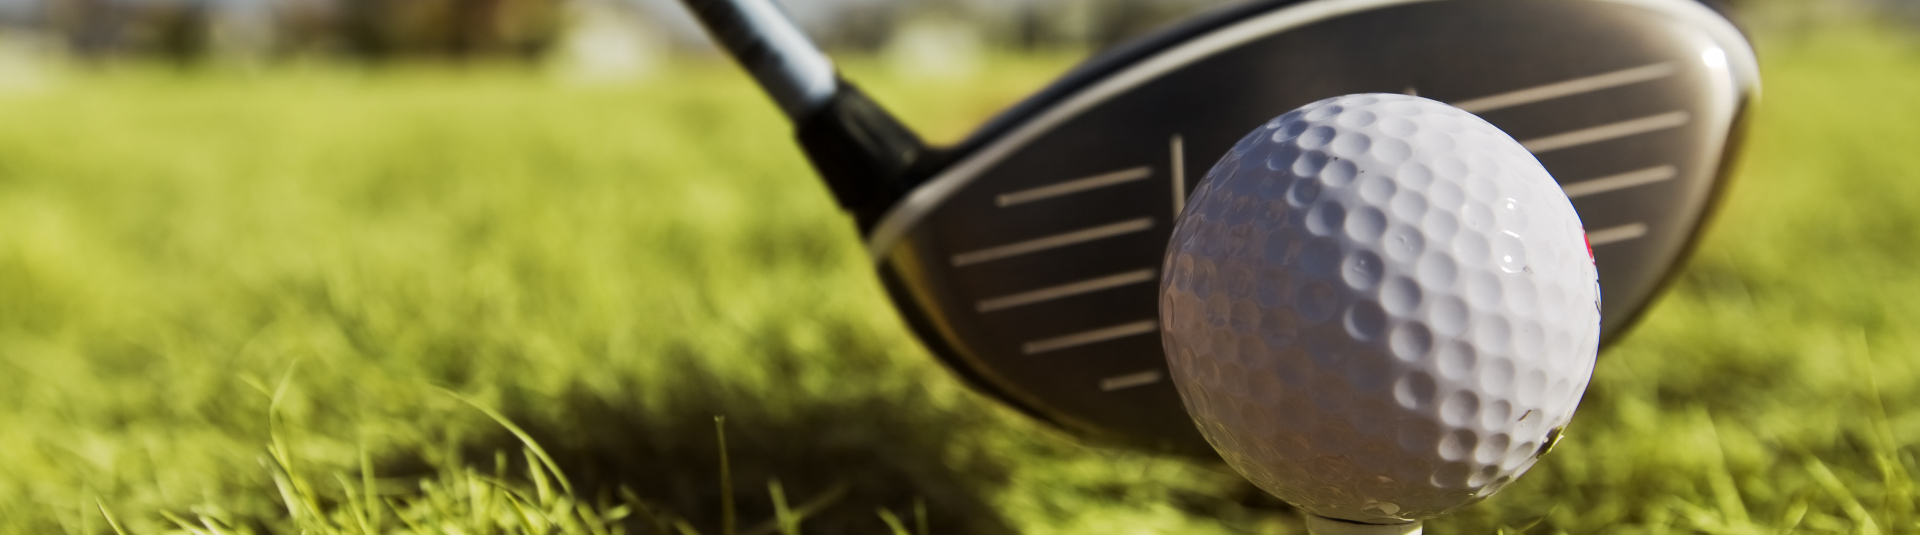 close up of golf club against golf ball